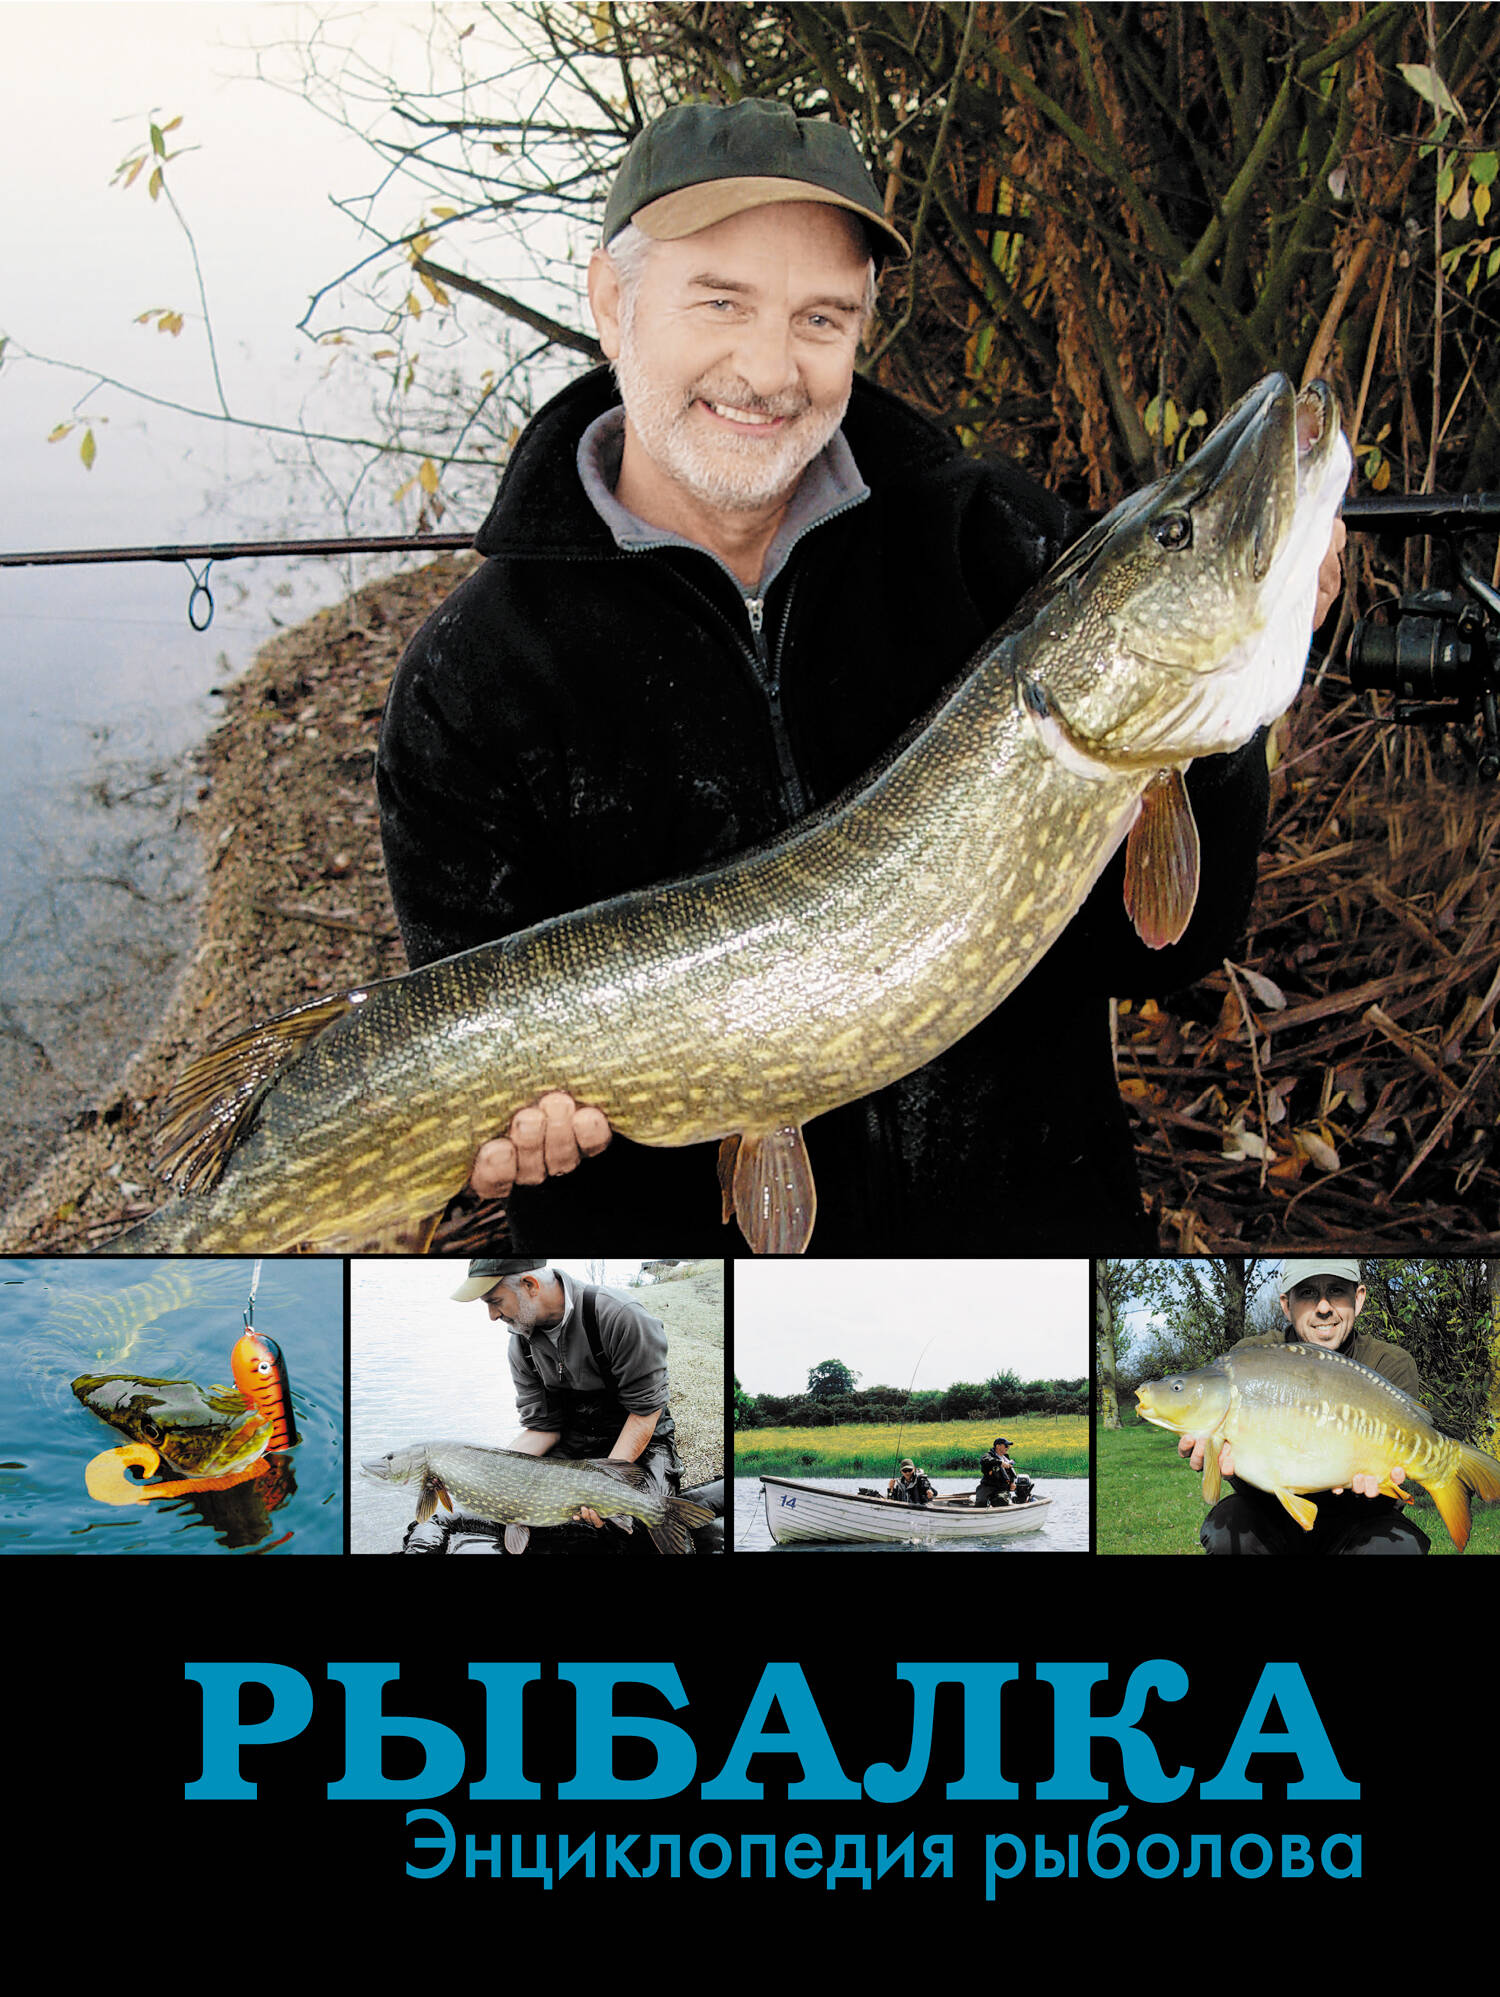  Рыбалка. Энциклопедия рыболова - страница 0